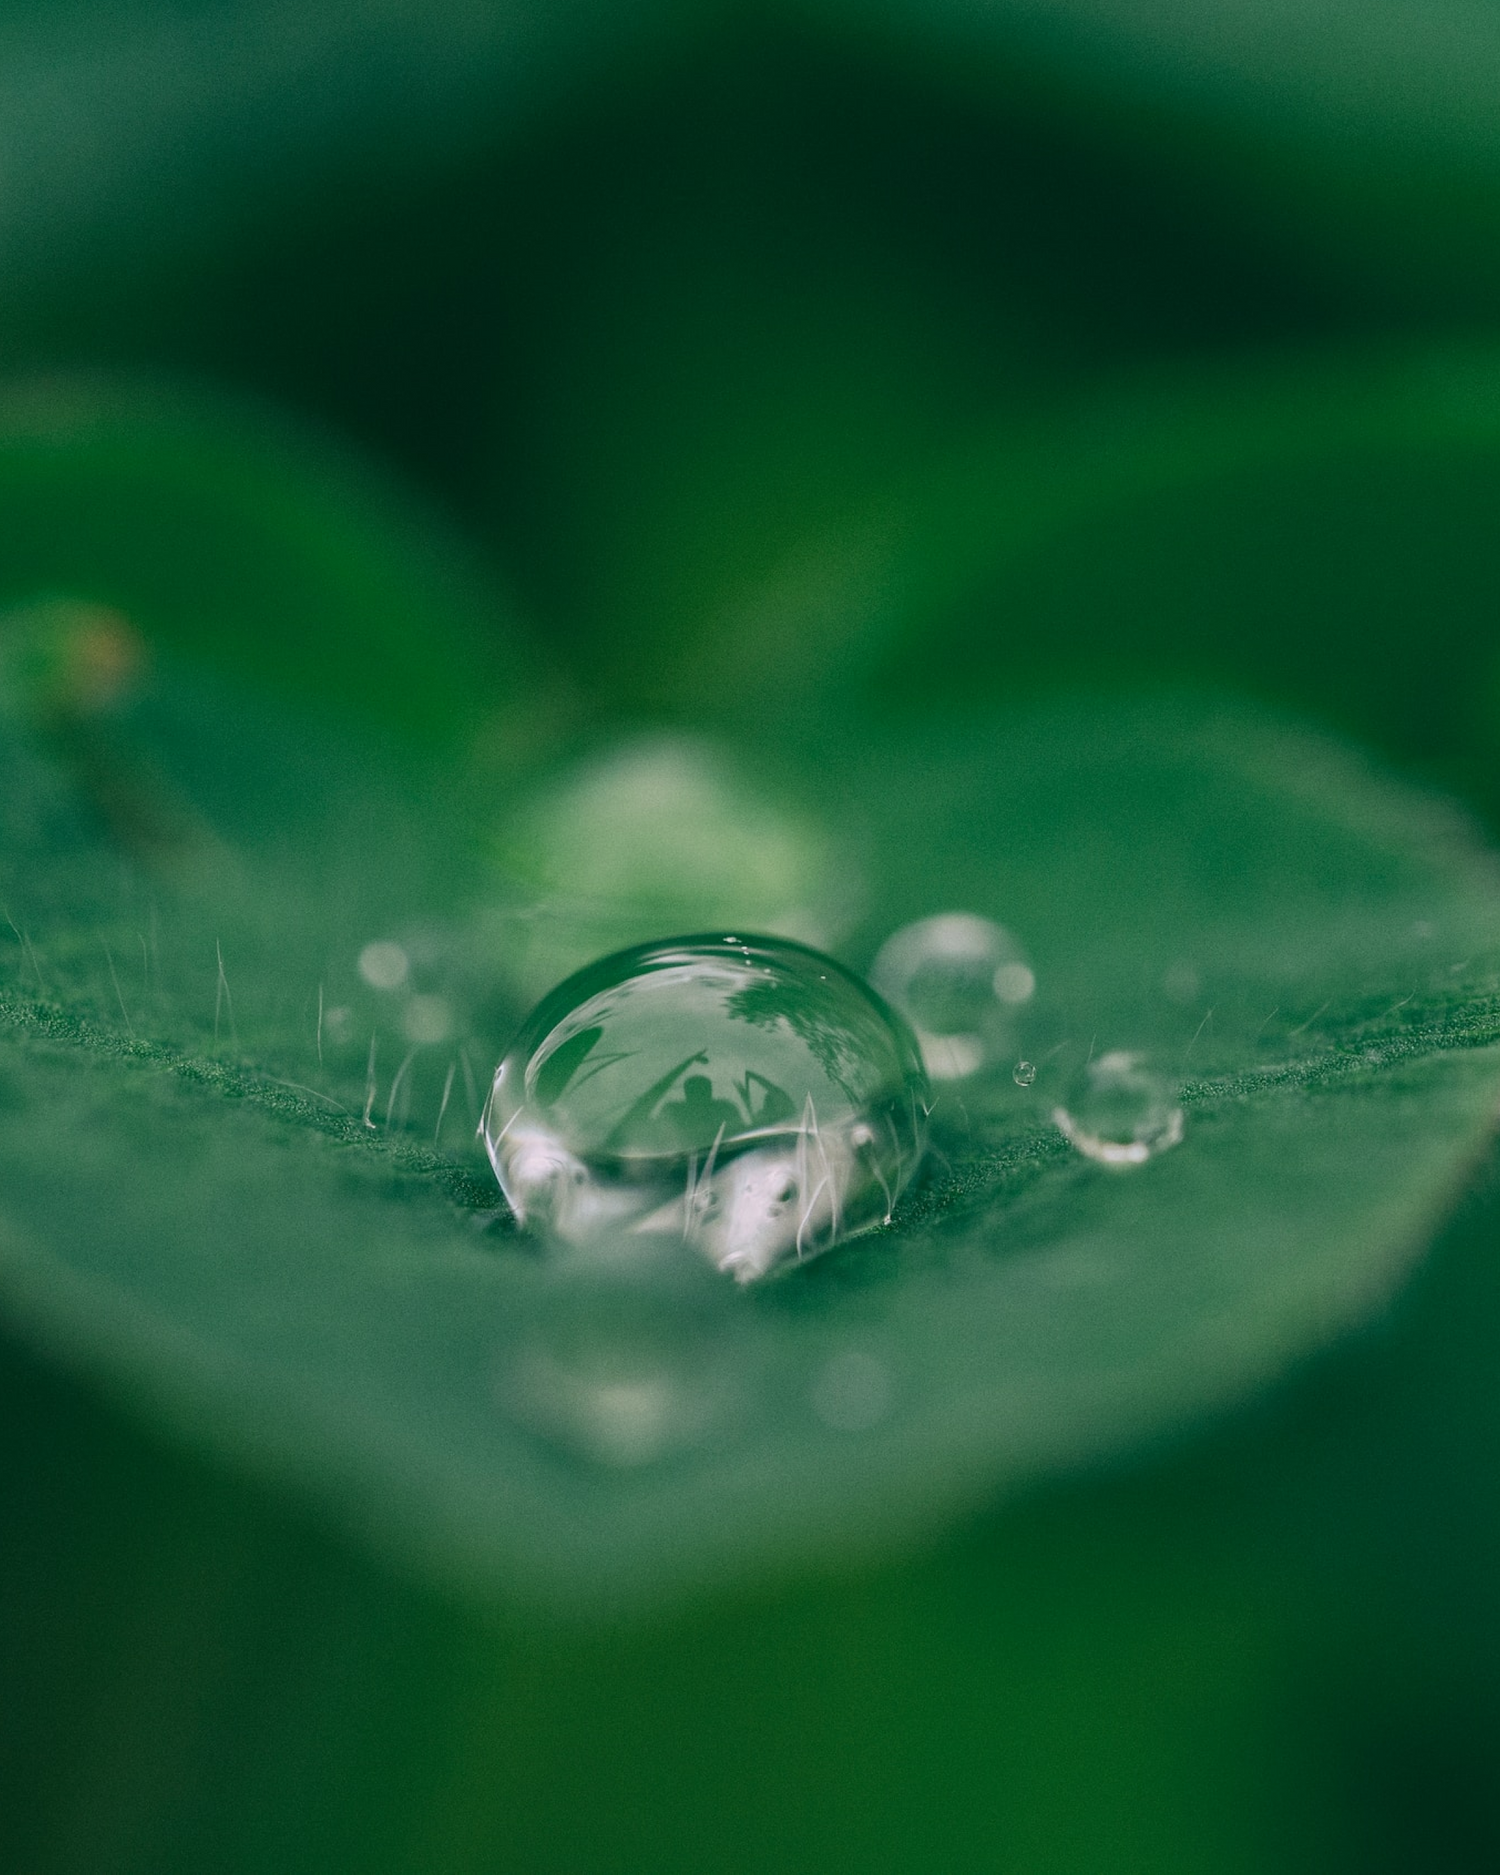 Droplet of water on leaf